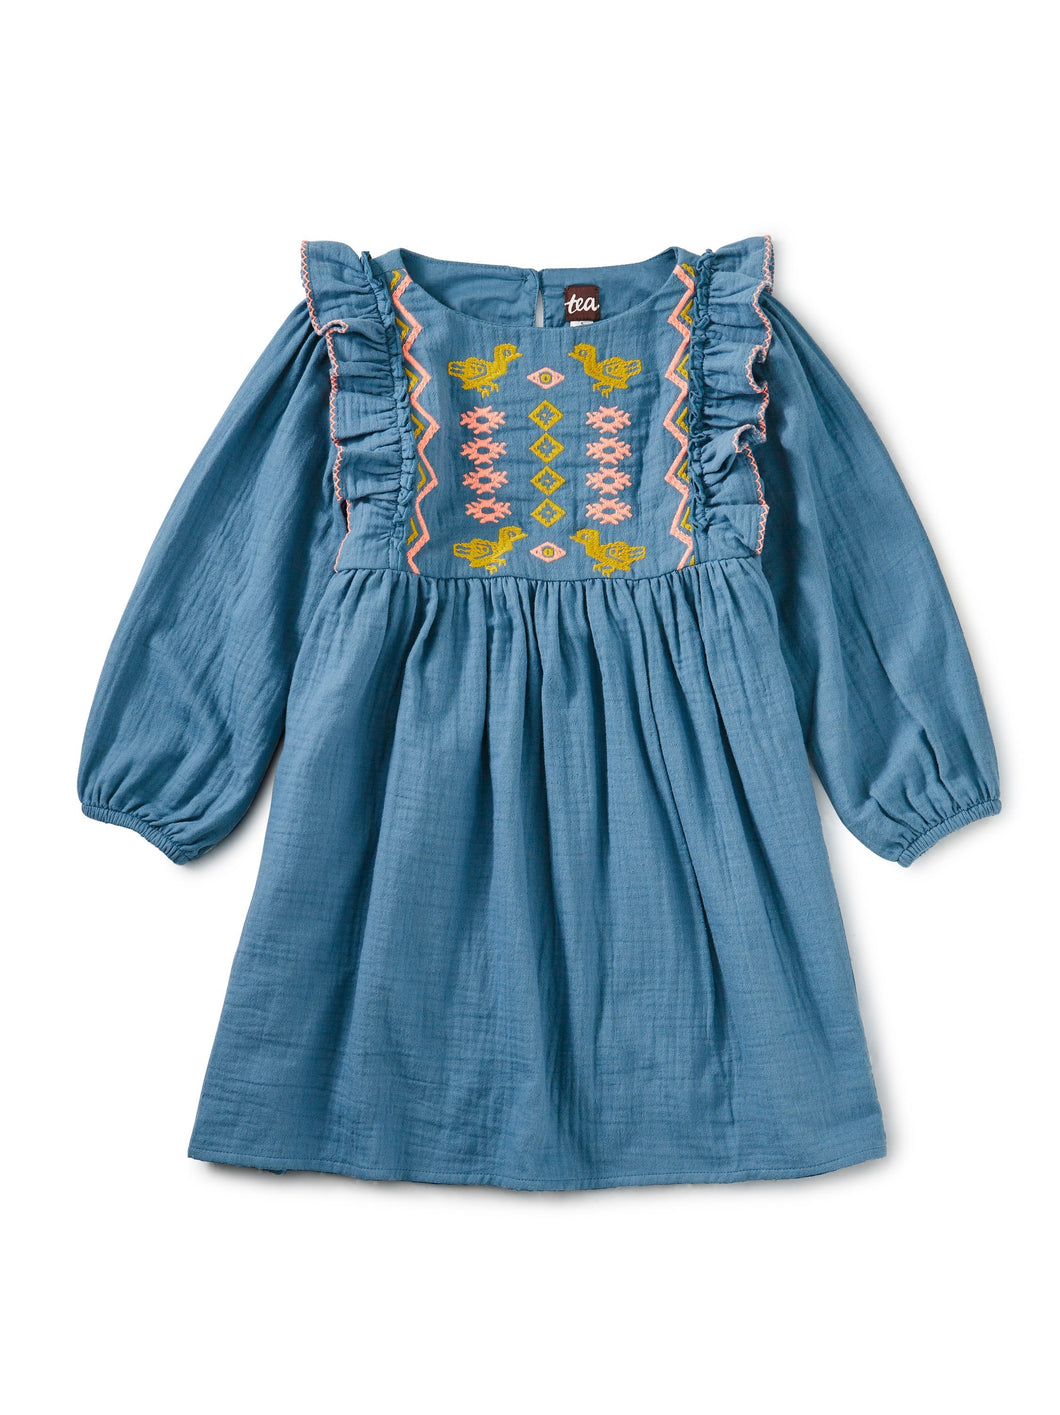 Aegean Blue Embroidered Ruffle Dress